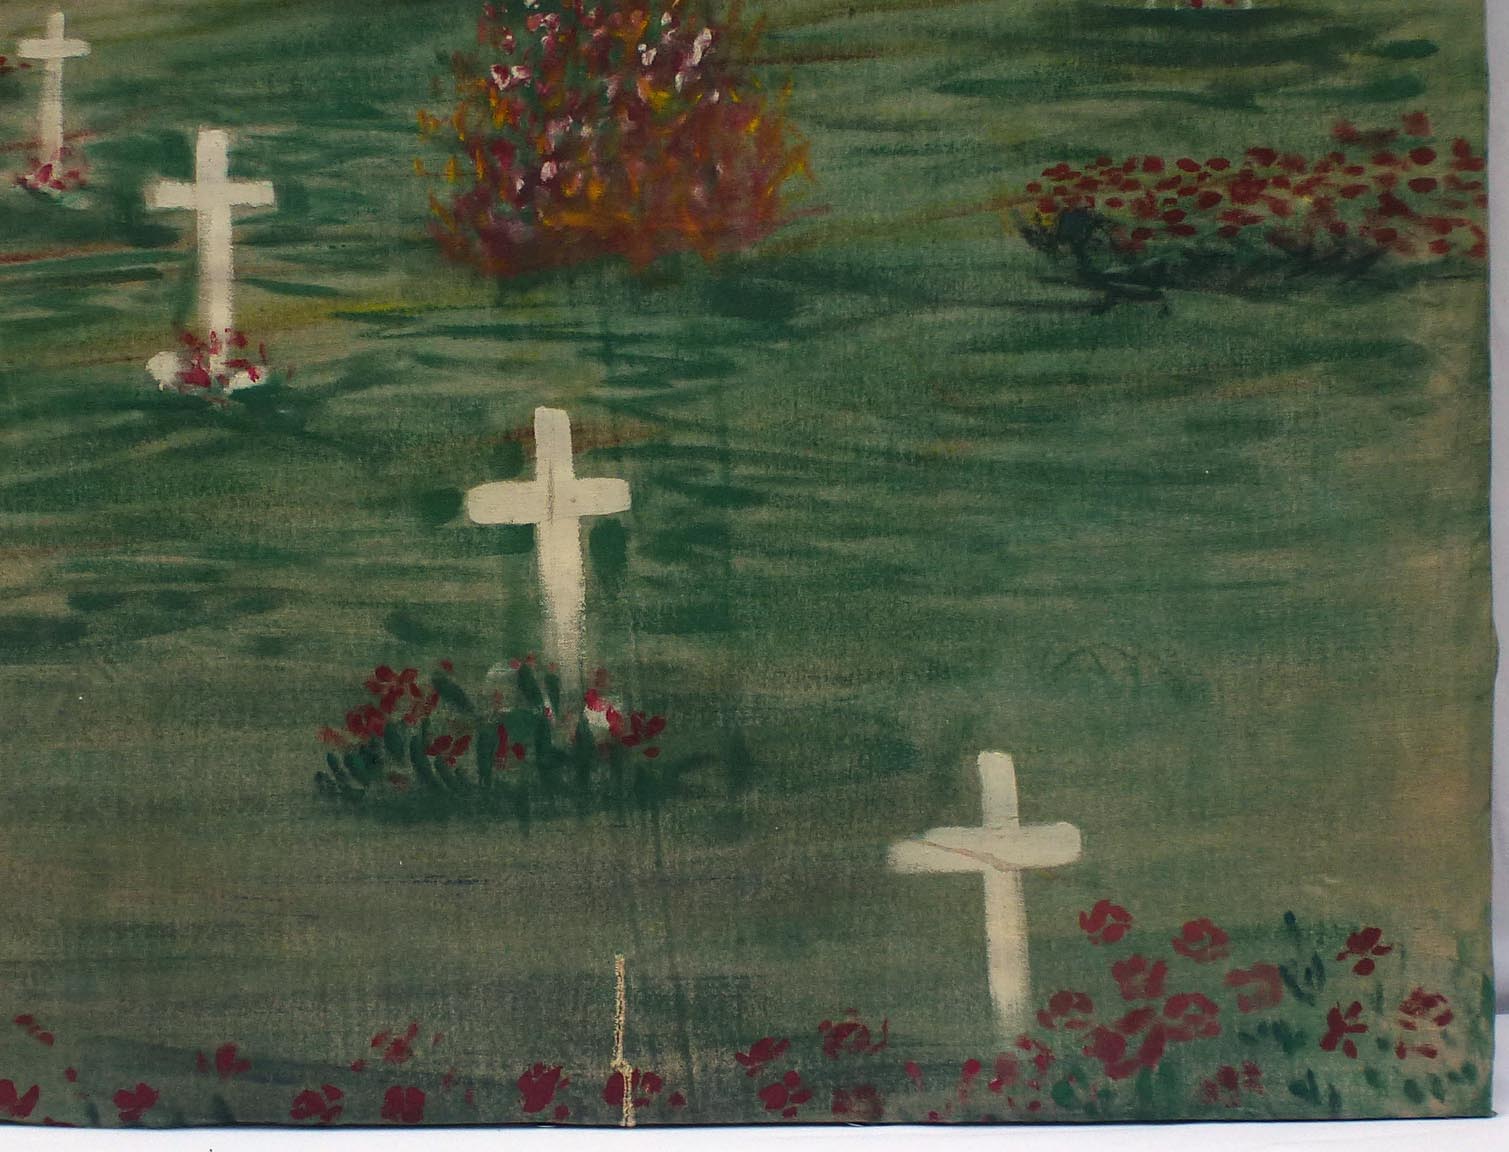 War graveyard painting